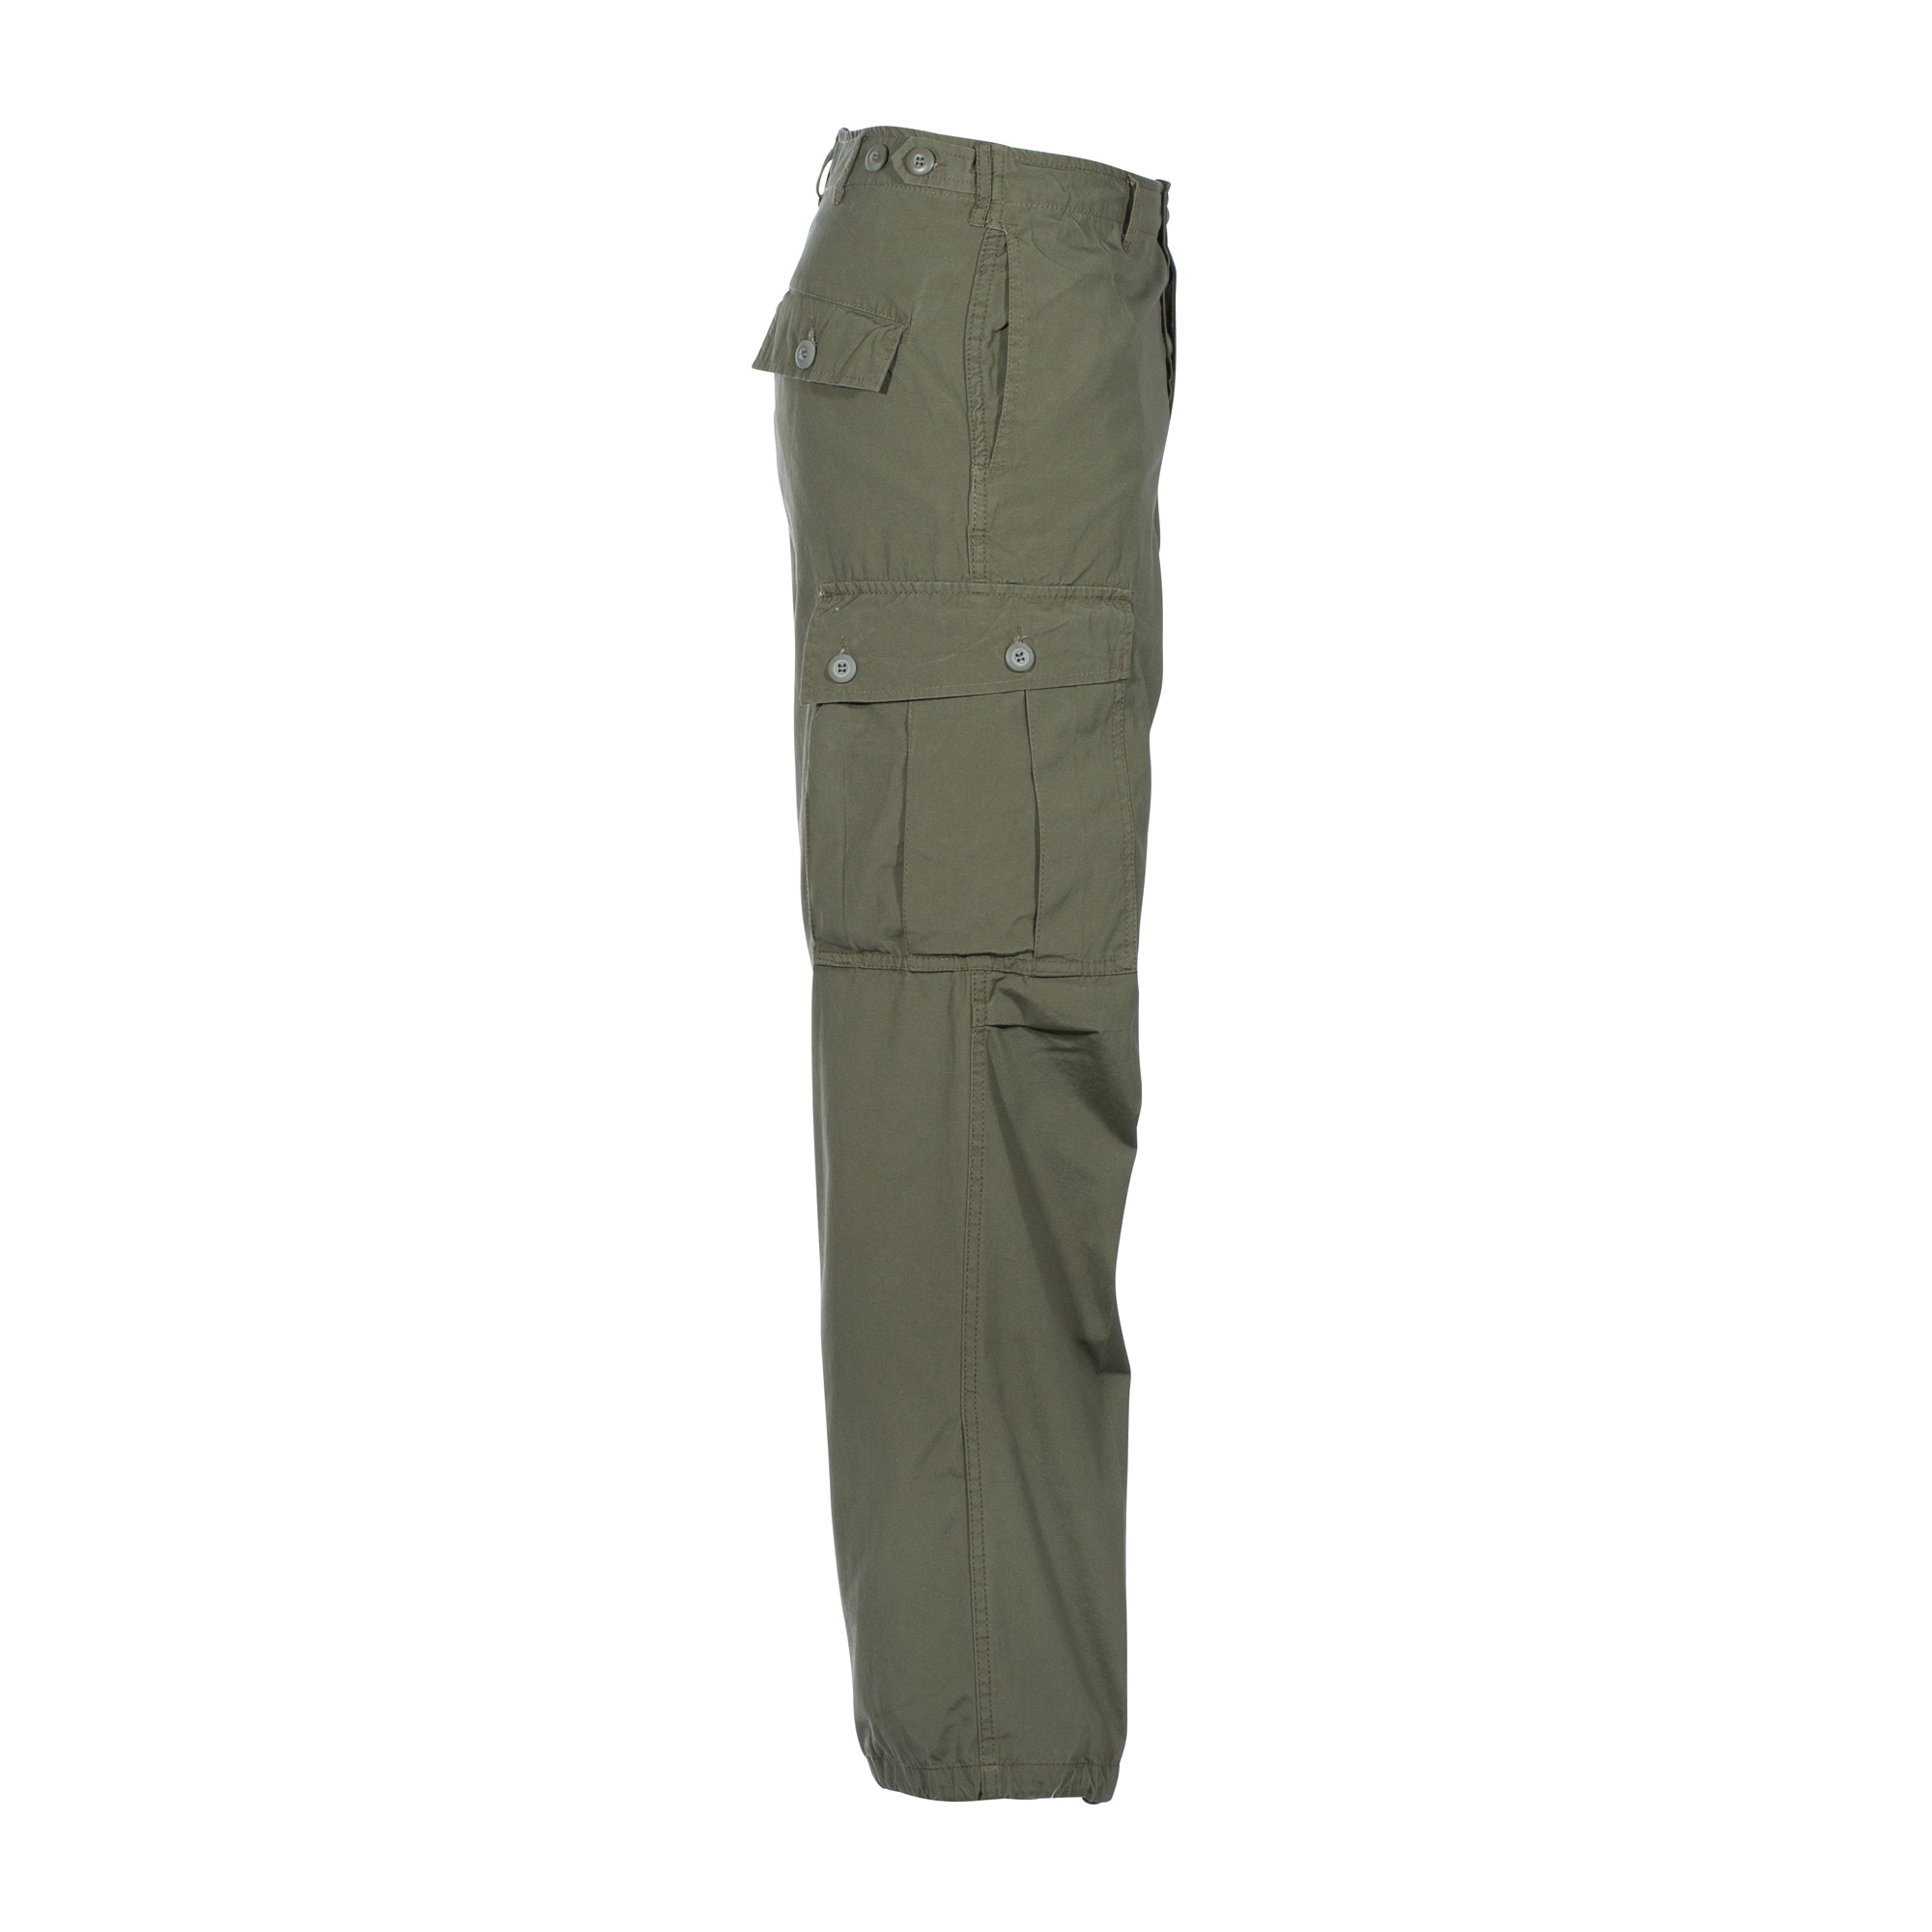 Purchase Mil-Tec U.S. M64 Vietnam Pants olive by ASMC